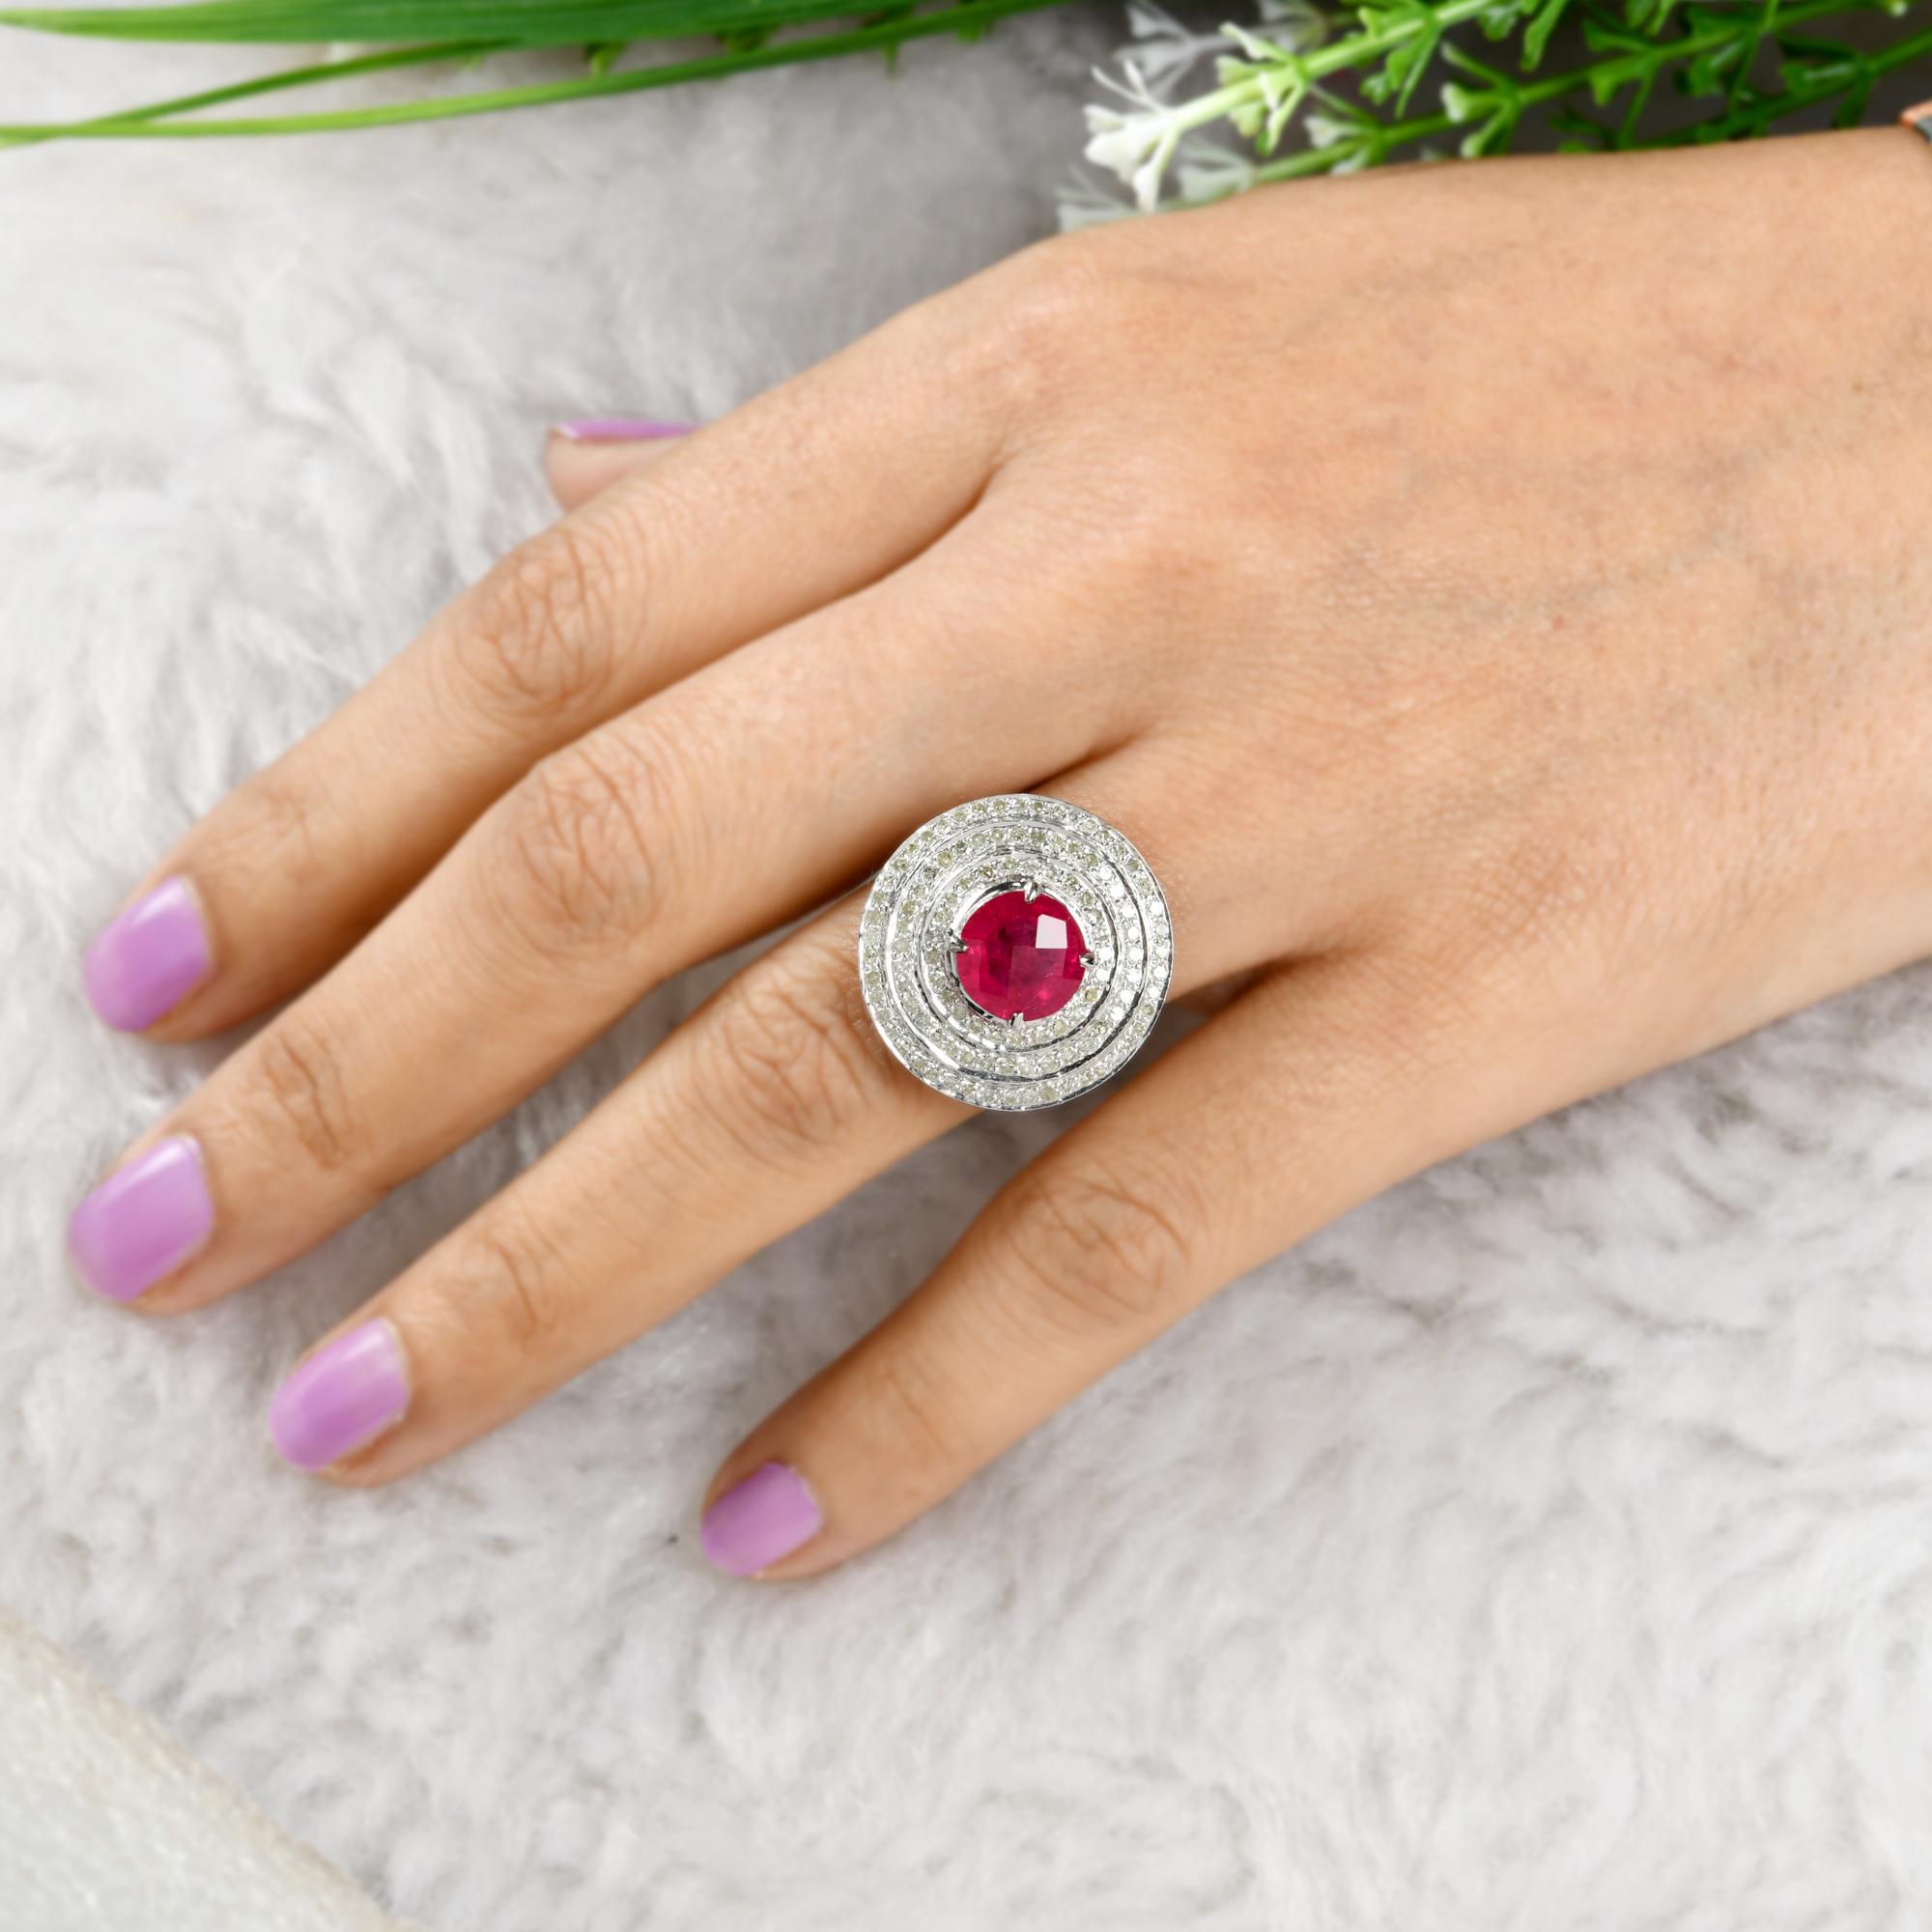 Women's Round Ruby Gemstone Cocktail Ring Diamond 18 Karat Gold Silver Handmade Jewelry